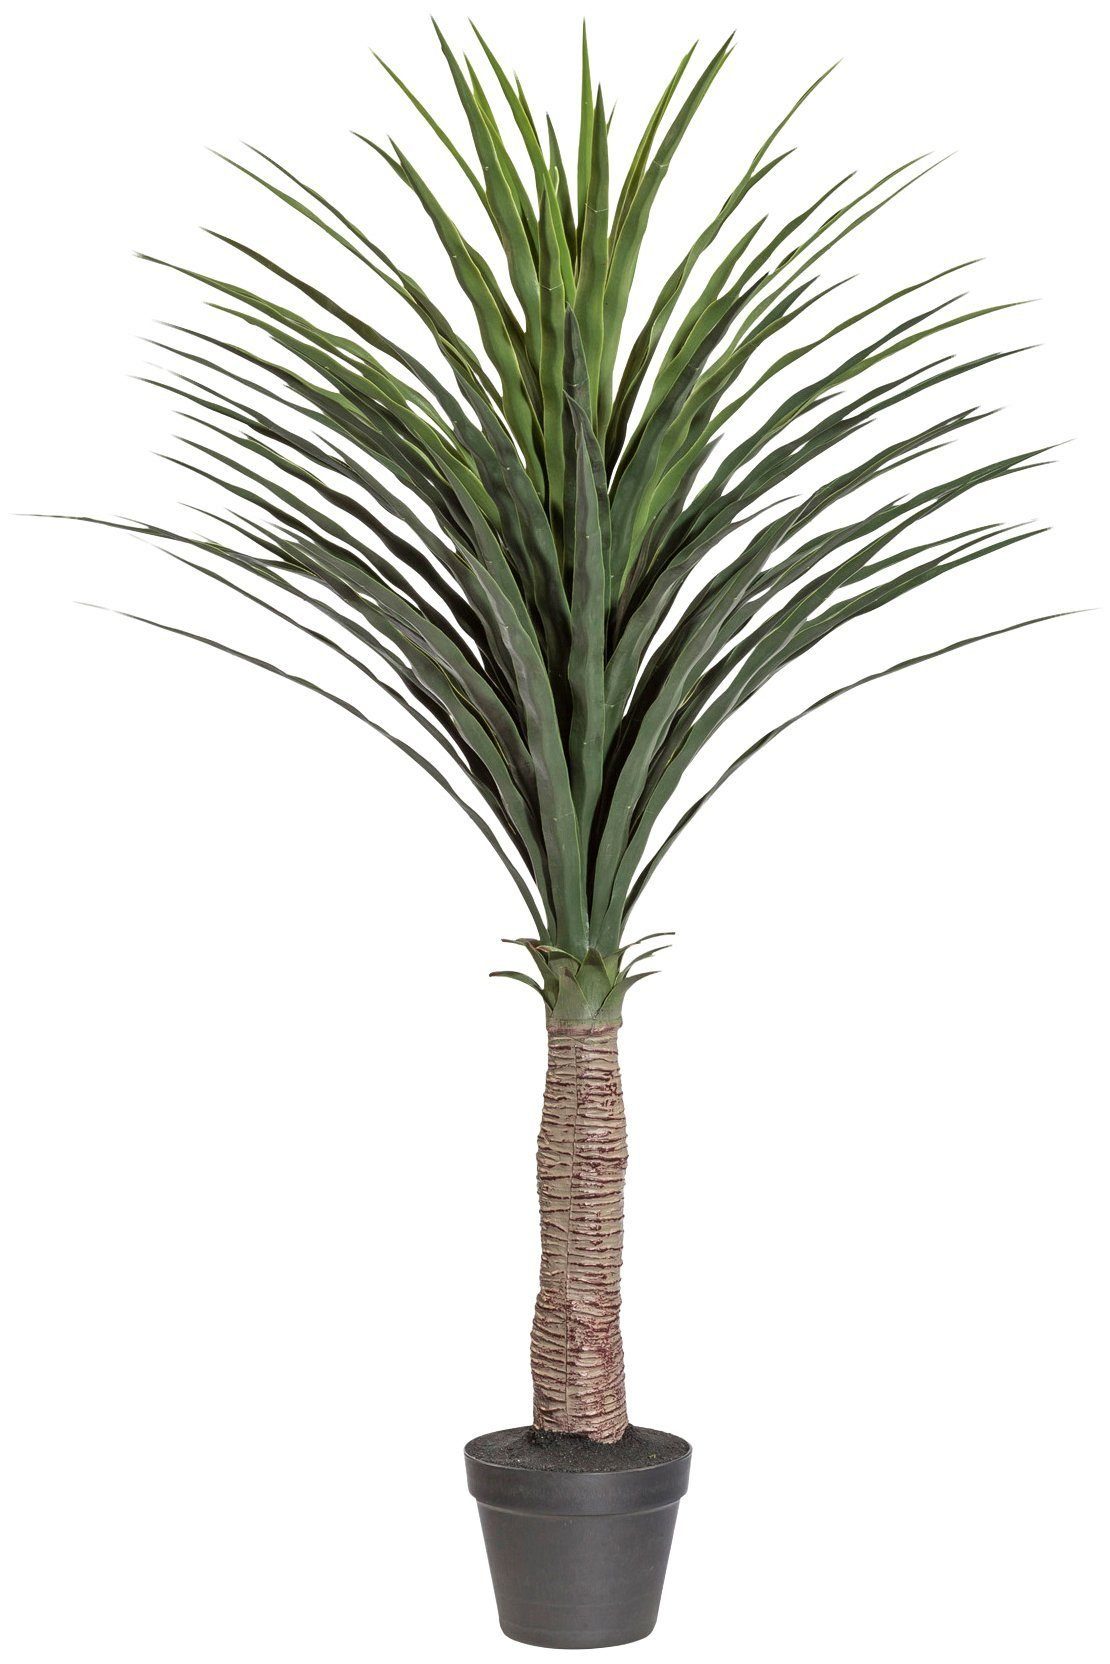 Creativ green Kunstpalm Palm yucca in een plastic pot (1 stuk)